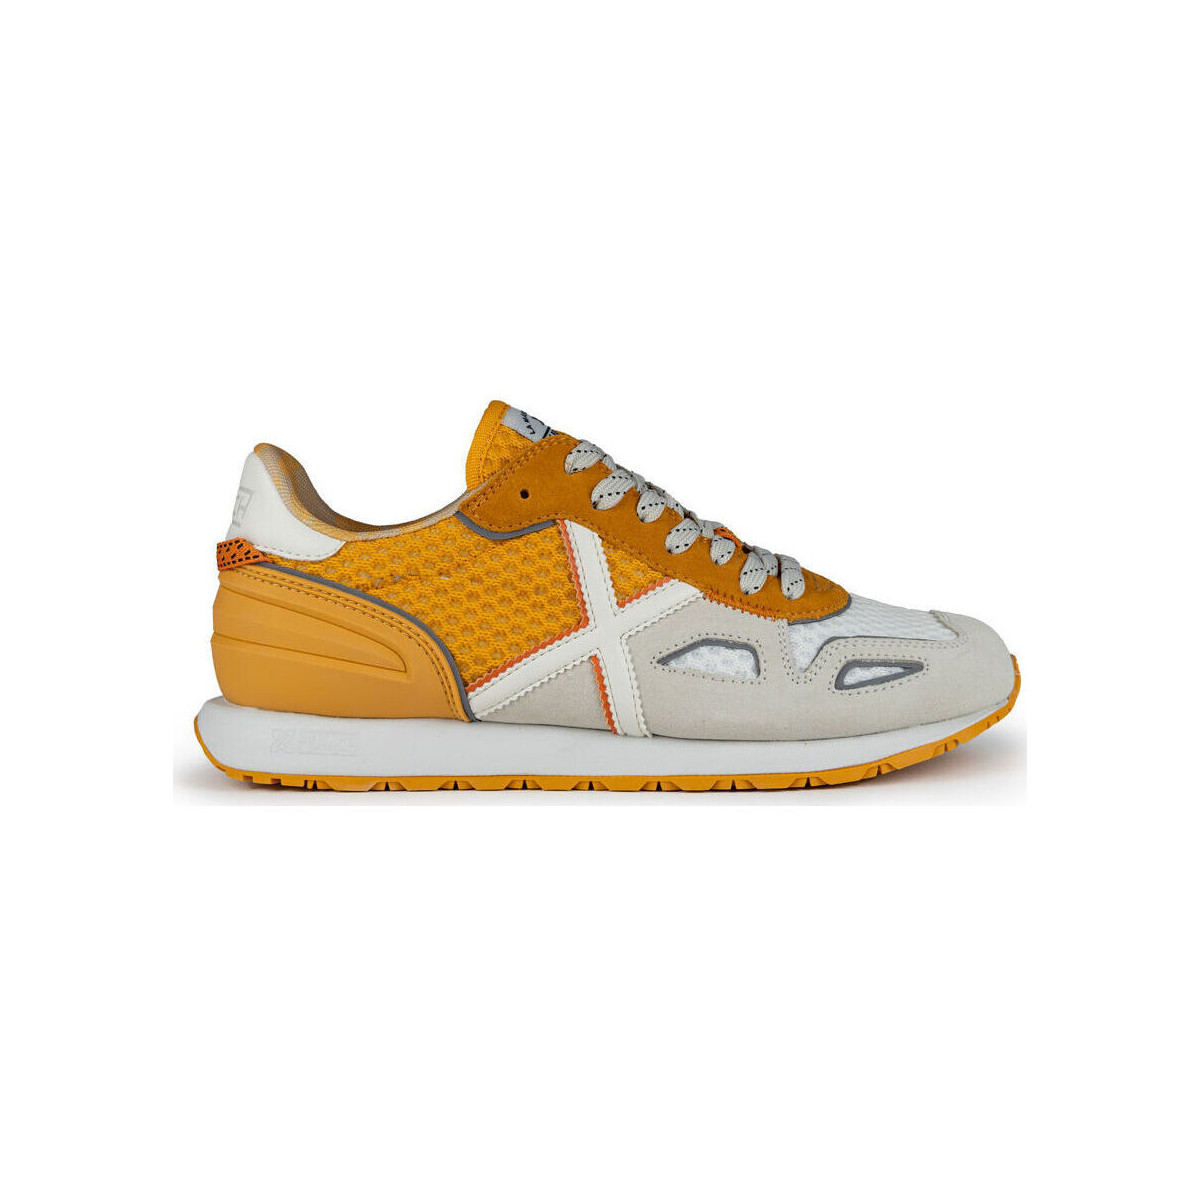 Chaussures Homme Baskets mode Munich Massana evo 8620550 Naranja/Crema Orange